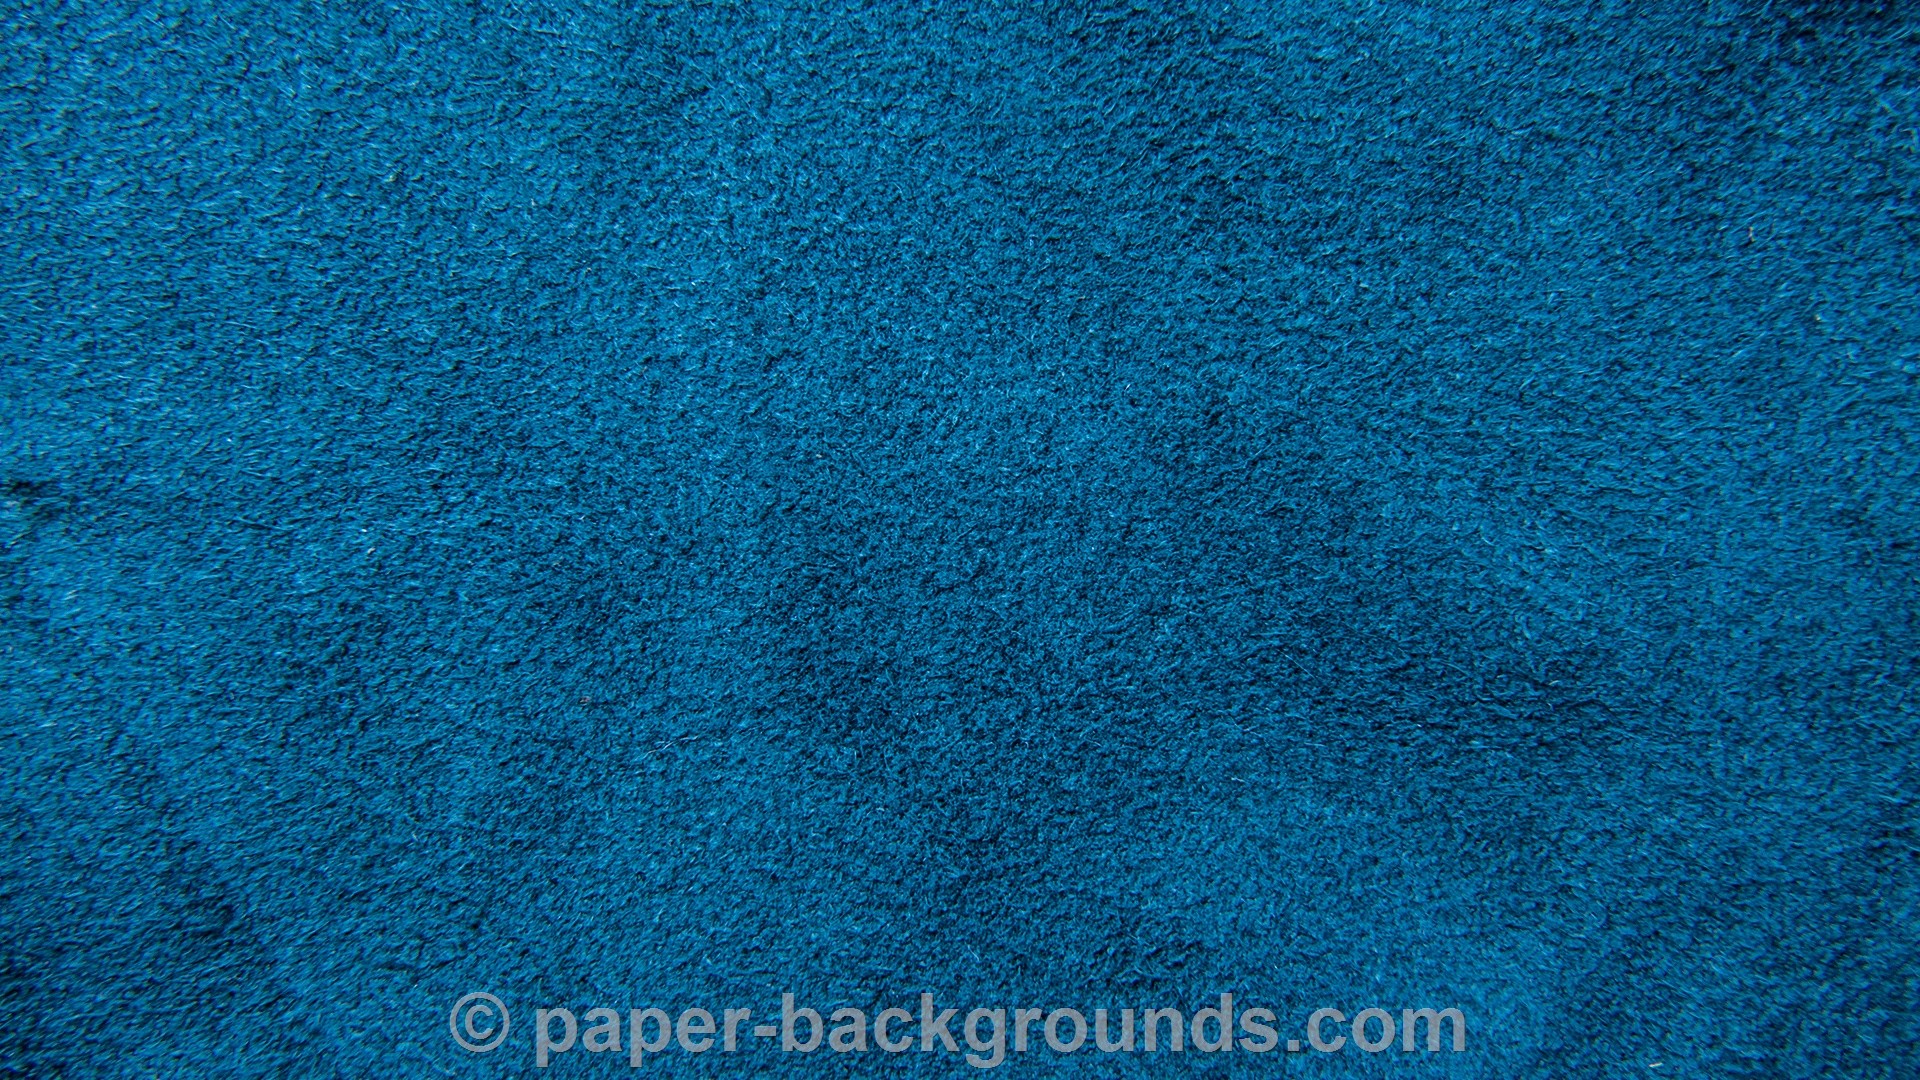 1920x1080 Blue Textured Background wallpaper